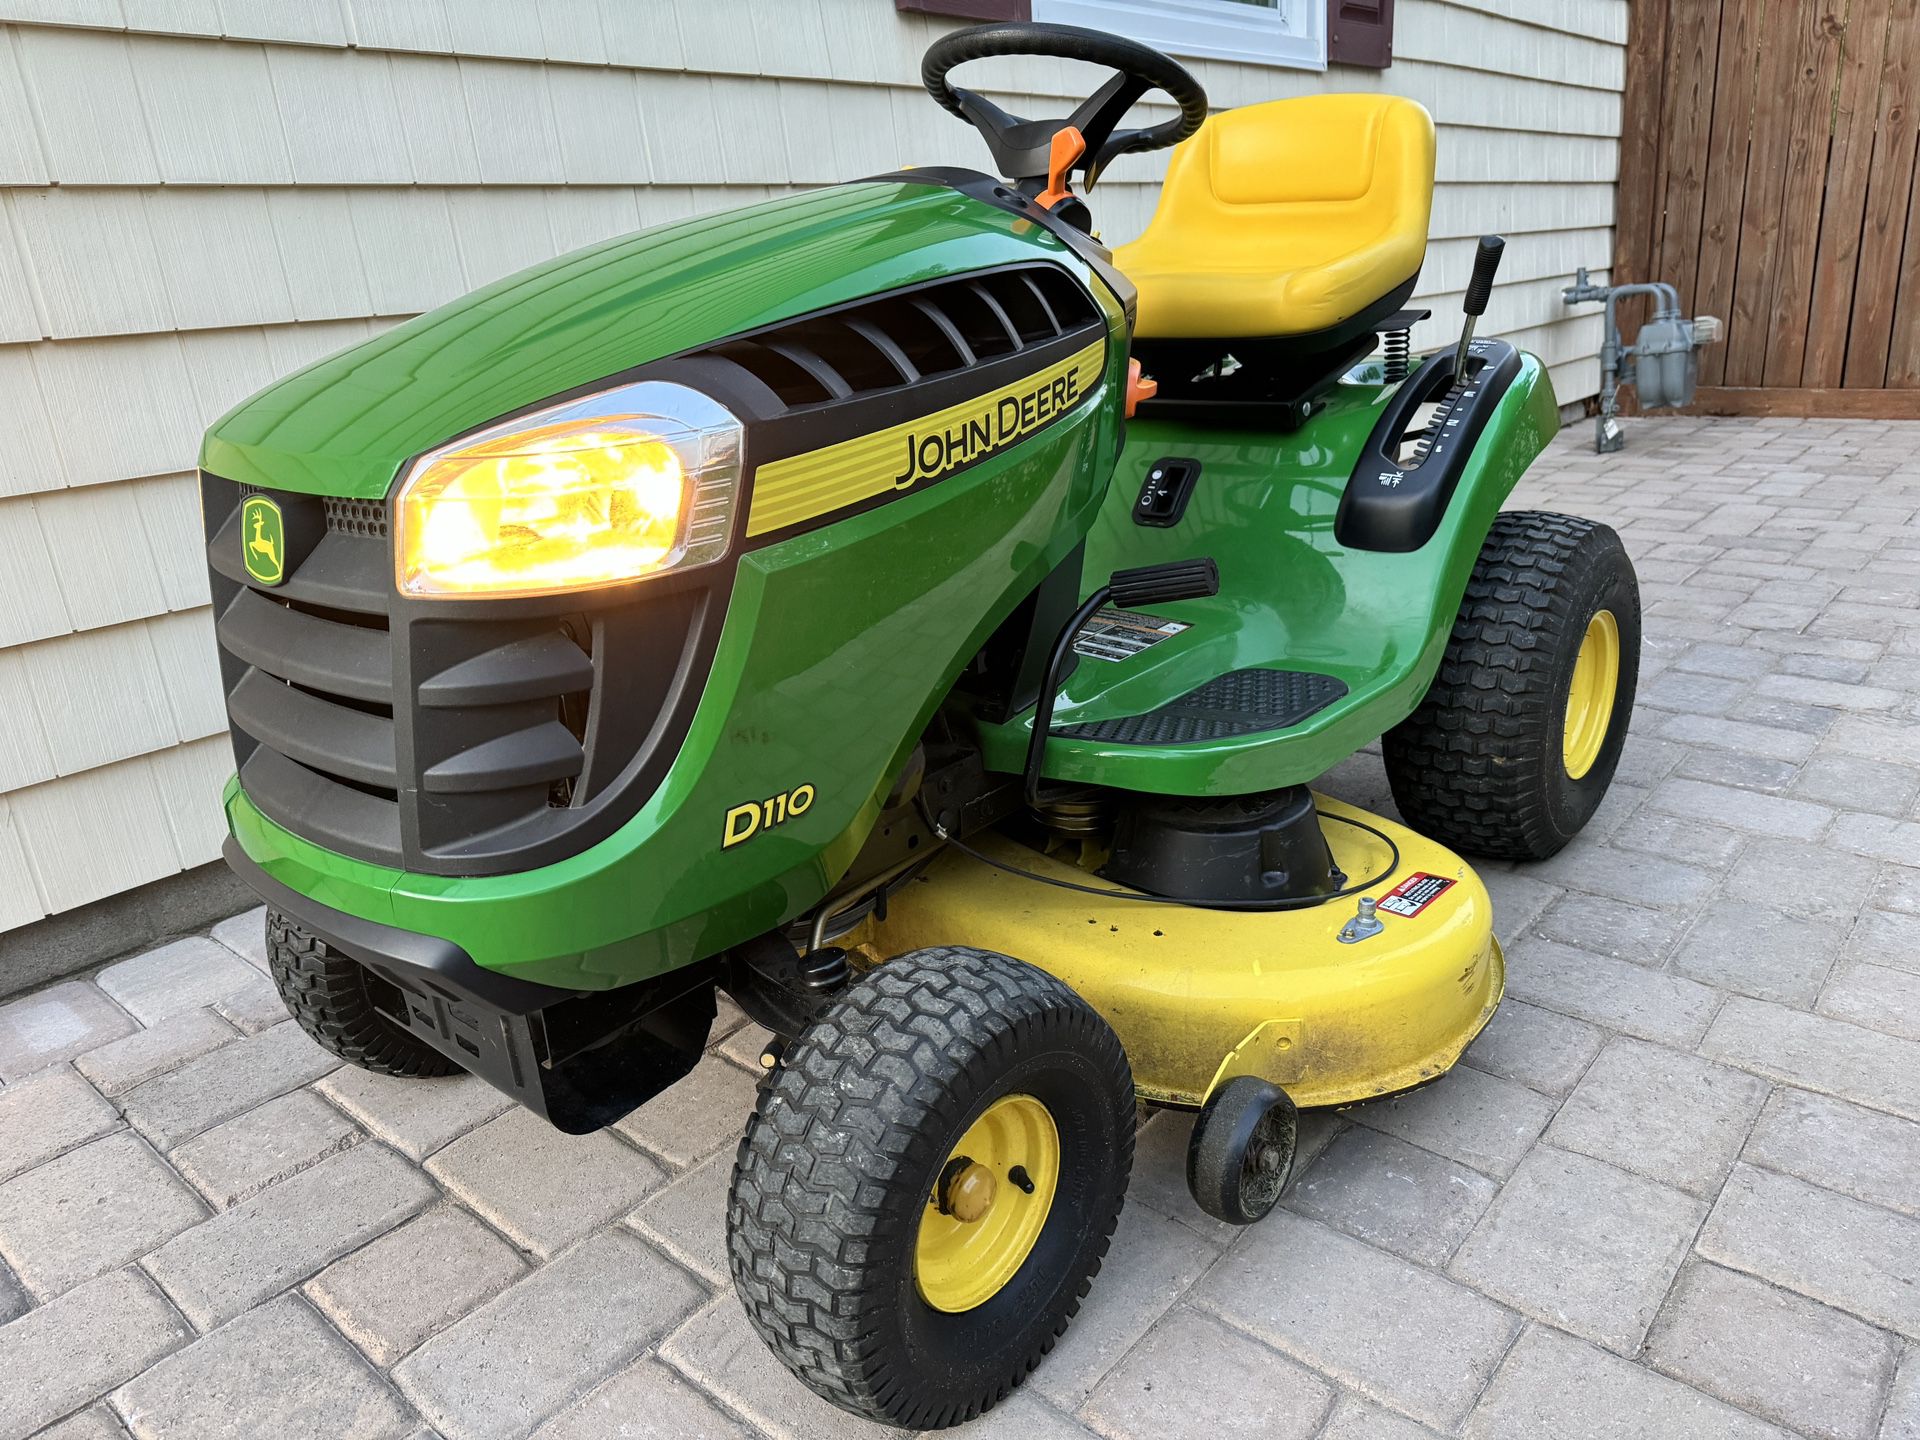 John Deere Riding Lawn Mower/Tractor